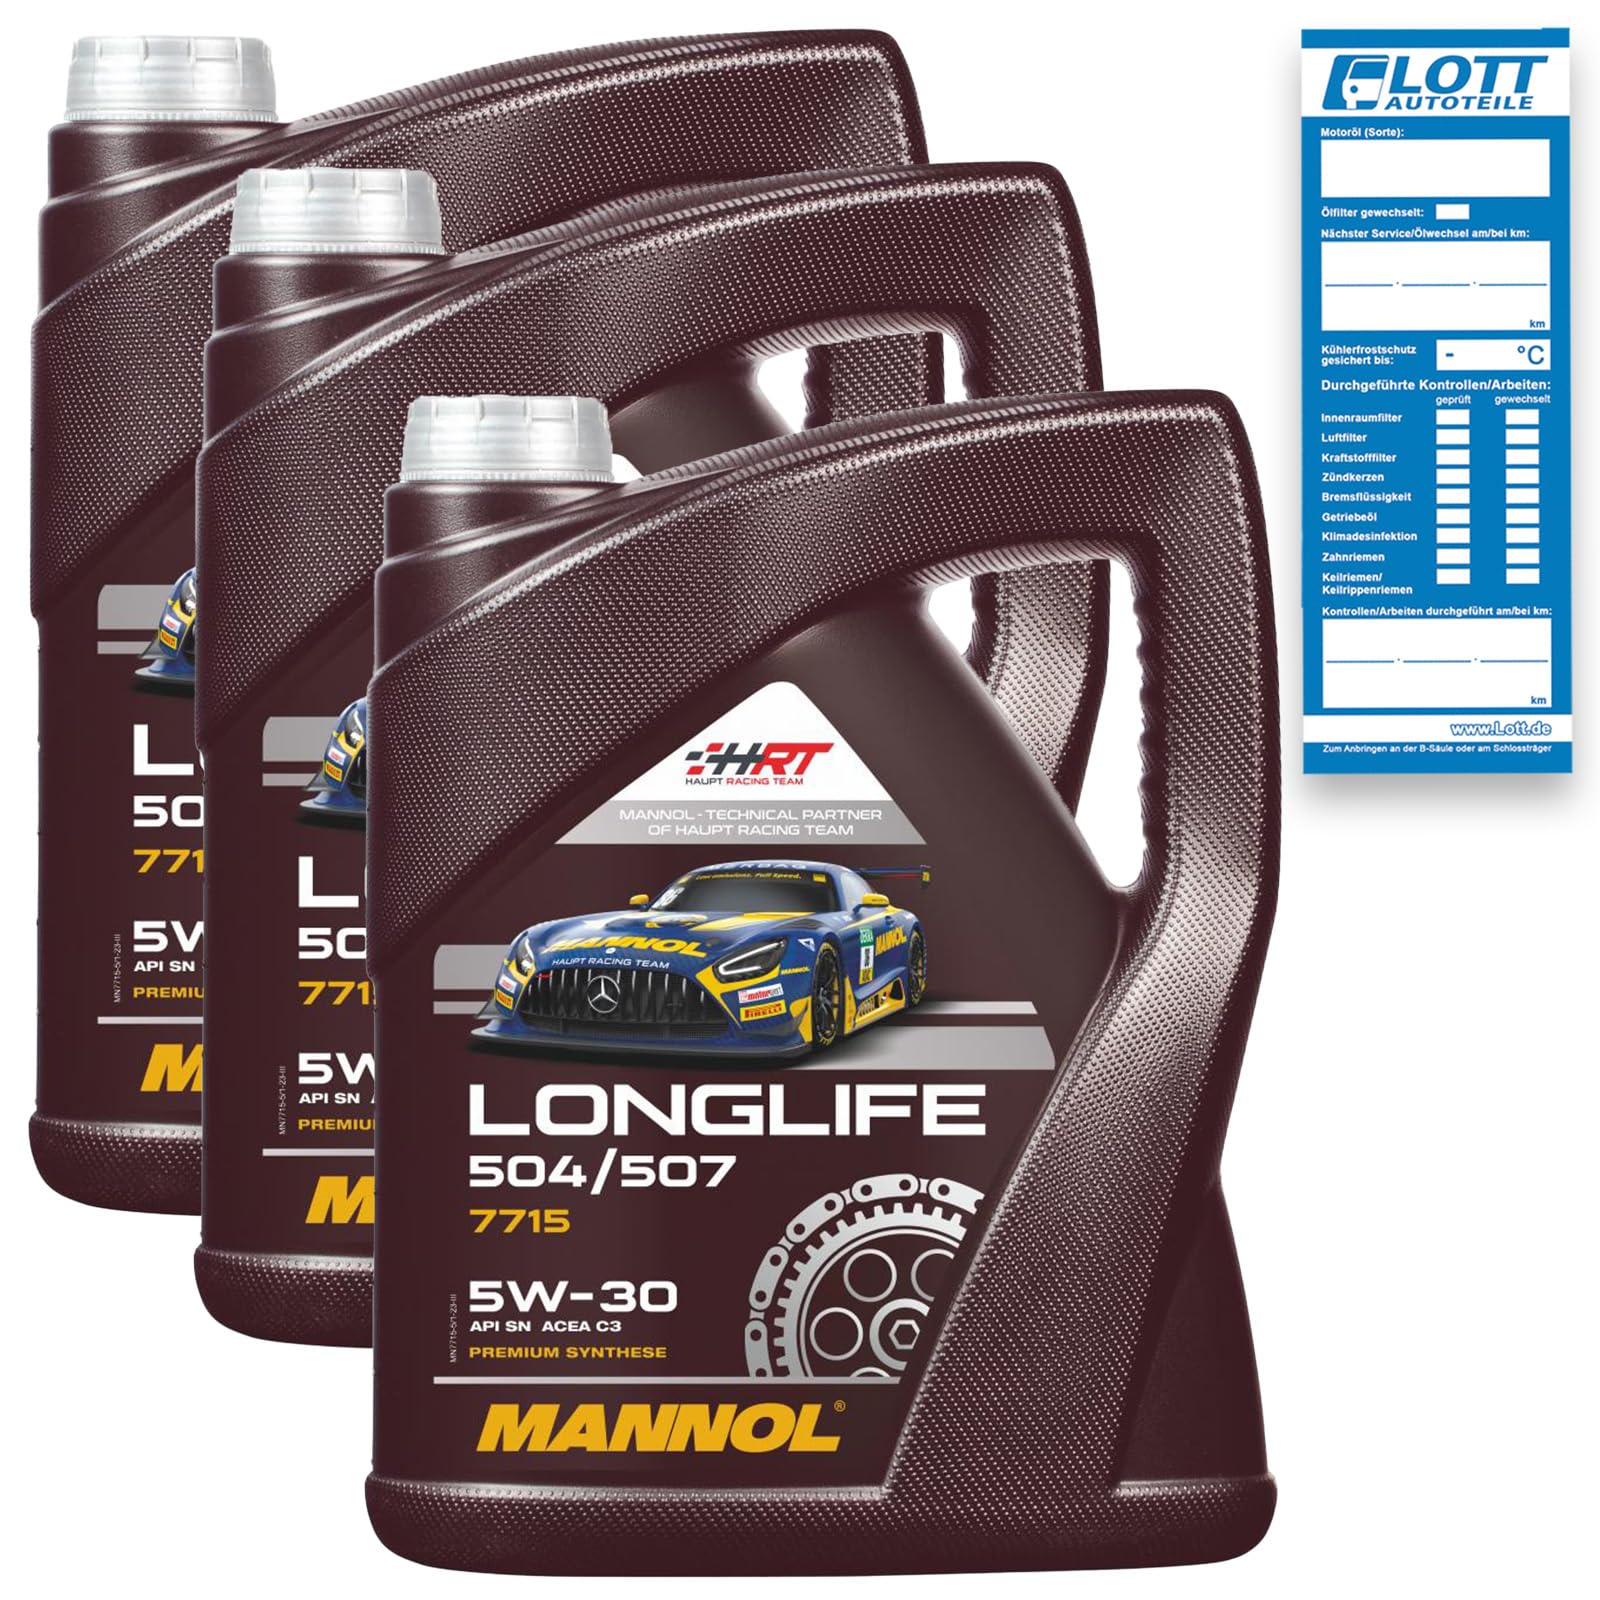 3x 5L MANNOL 7715 Longilfe 5W-30 Motoröl API SN/CF Motorenöl von MANNOL